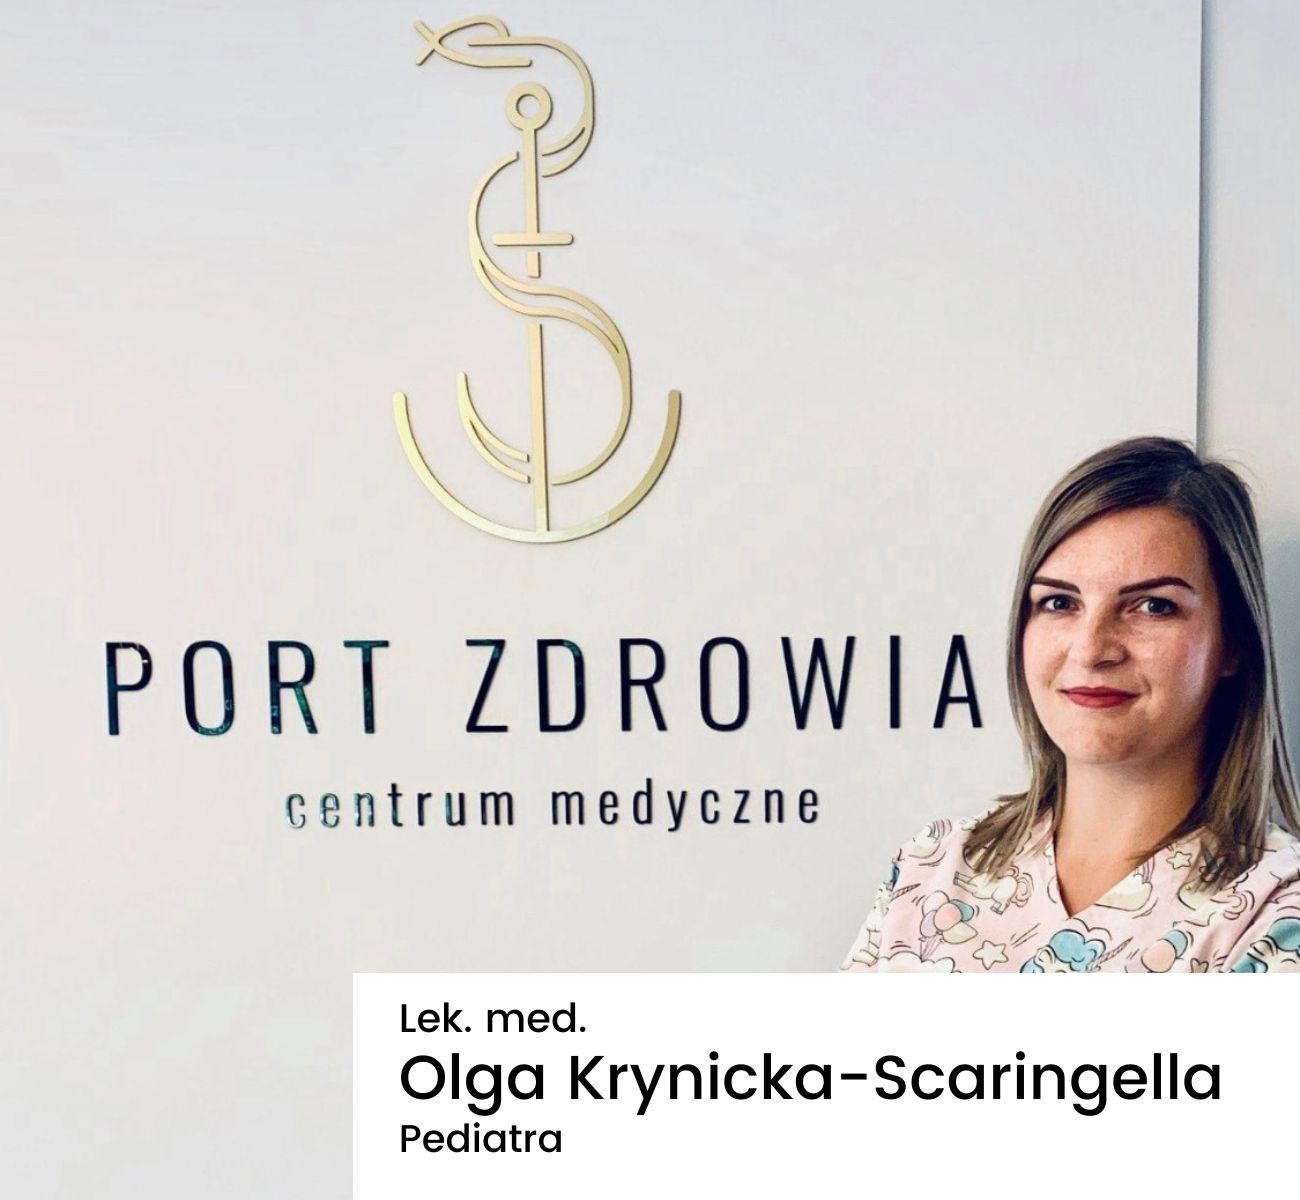 Pediatra Olga Krynicka-Scaringella